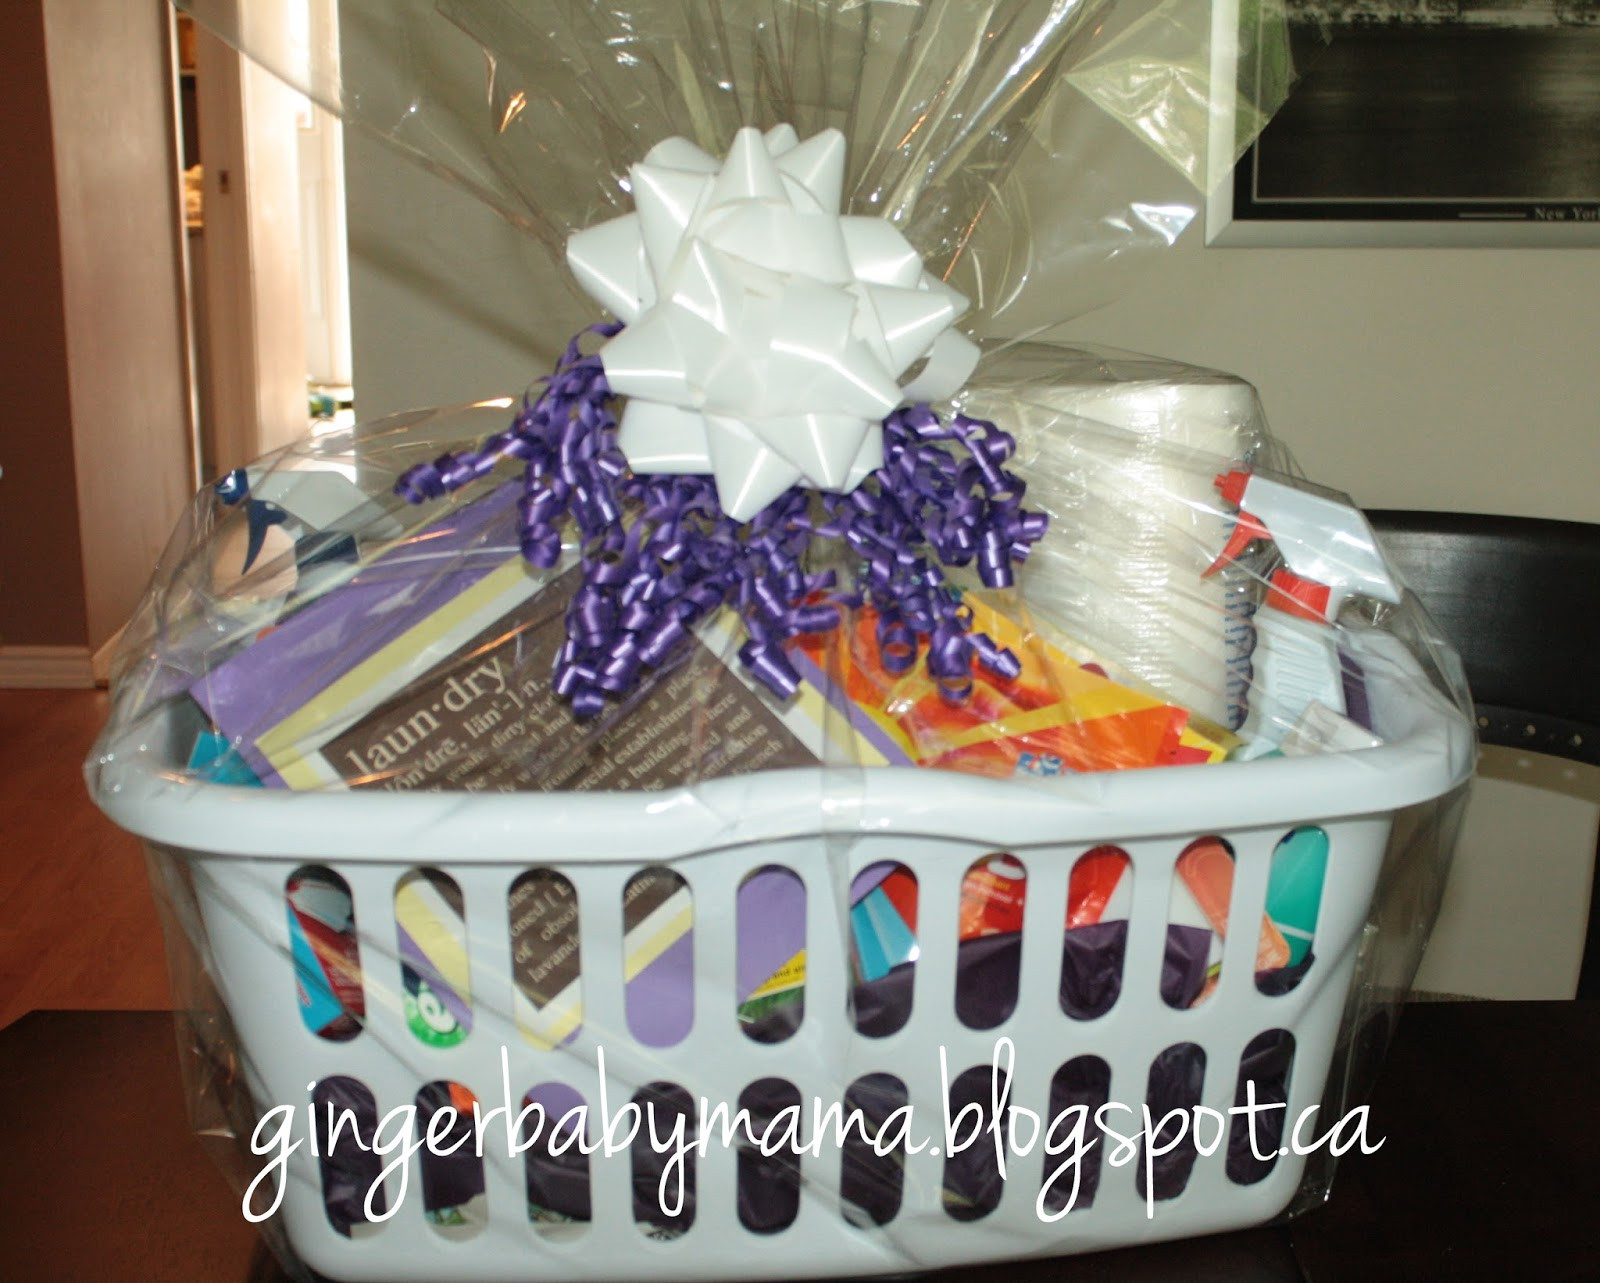 Ideas For Wedding Shower Gift
 GingerBabyMama Fun Practical Bridal Shower Gift